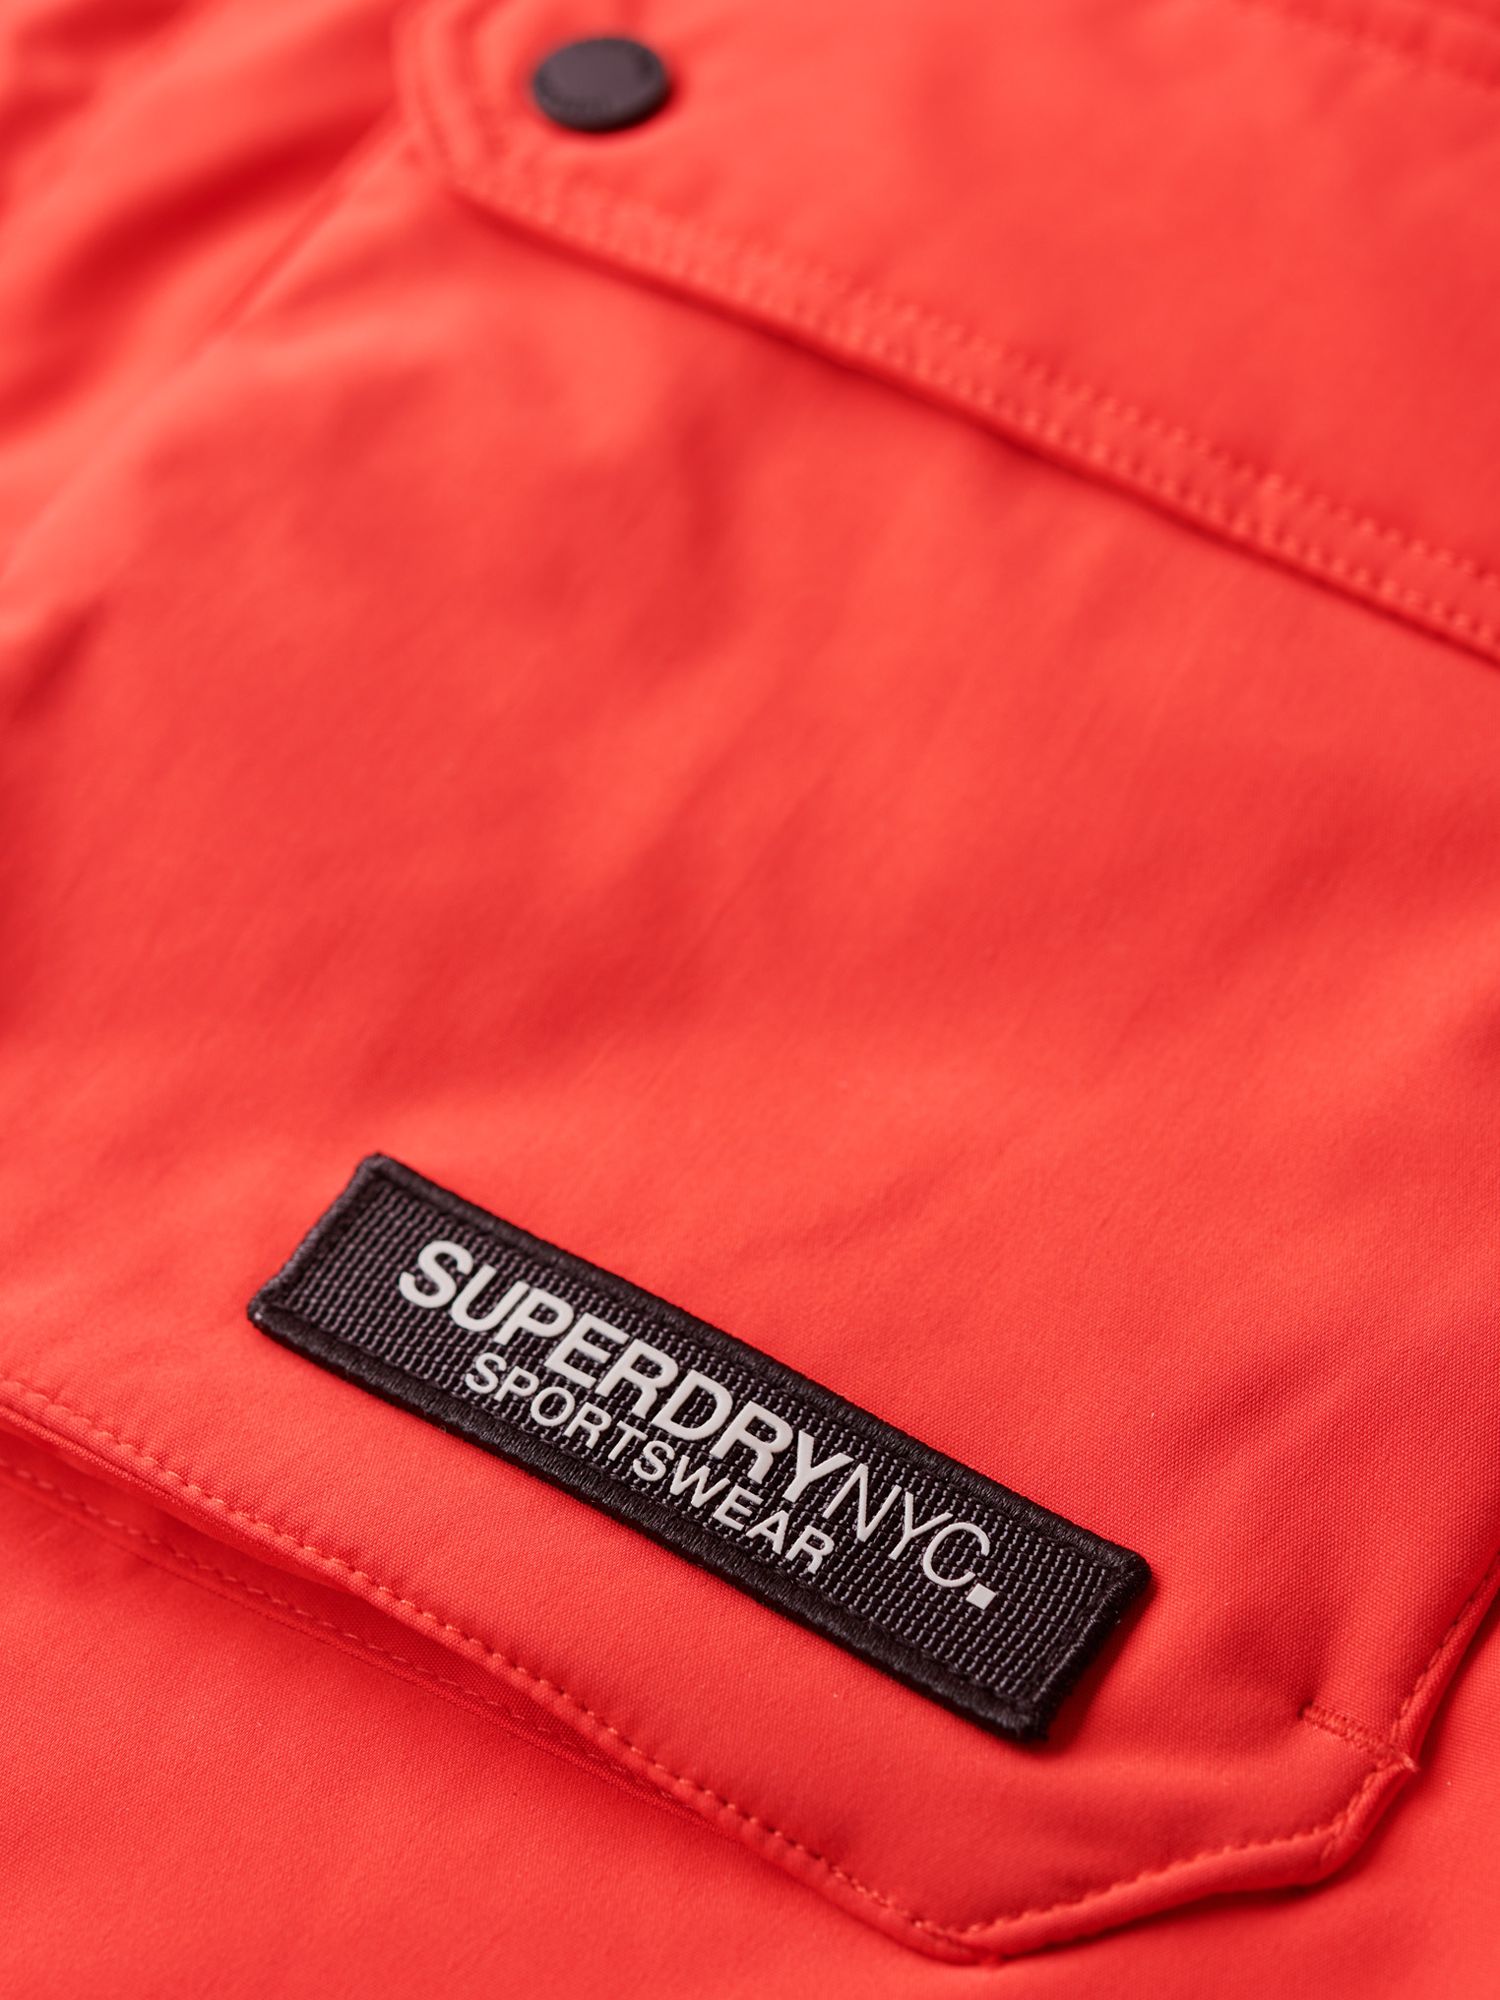 Superdry City Padded Parka Jacket, Sunset Red at John Lewis & Partners